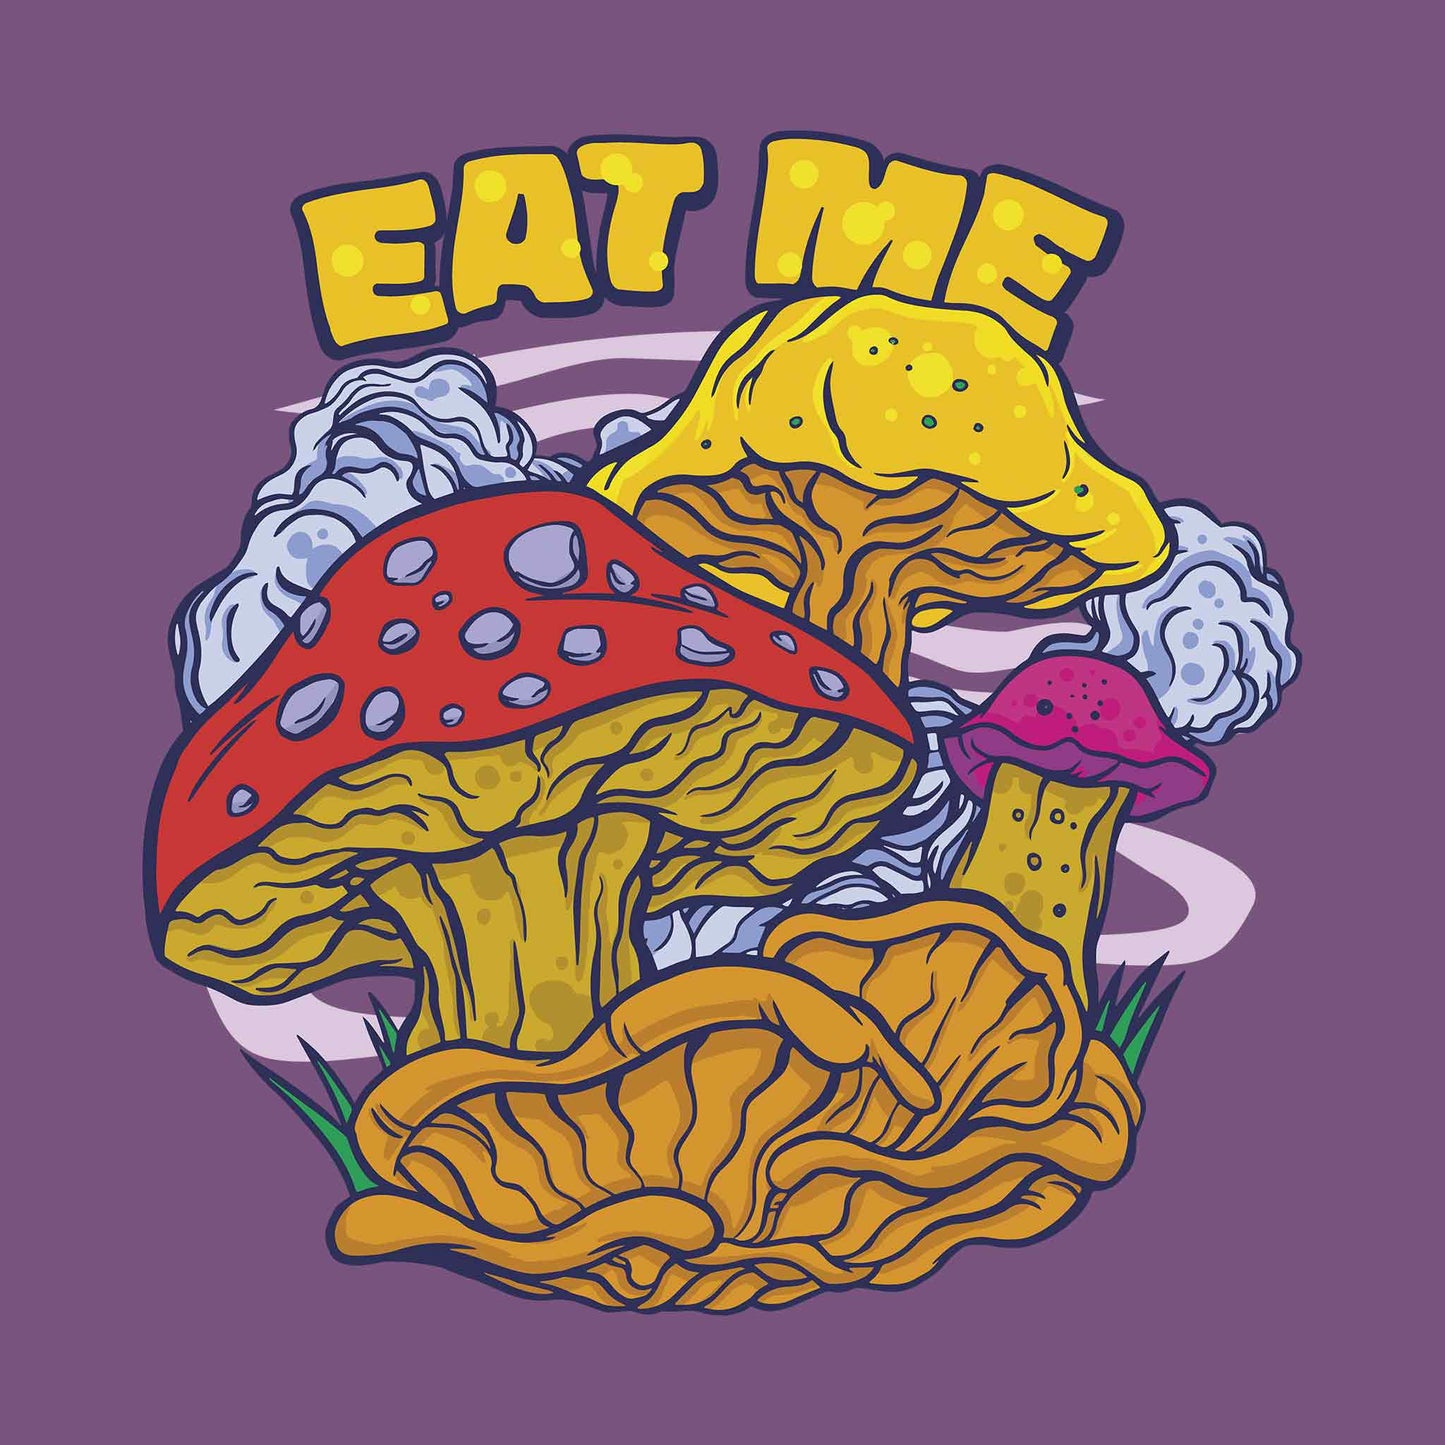 Eat Me (Mushrooms) T-Shirt